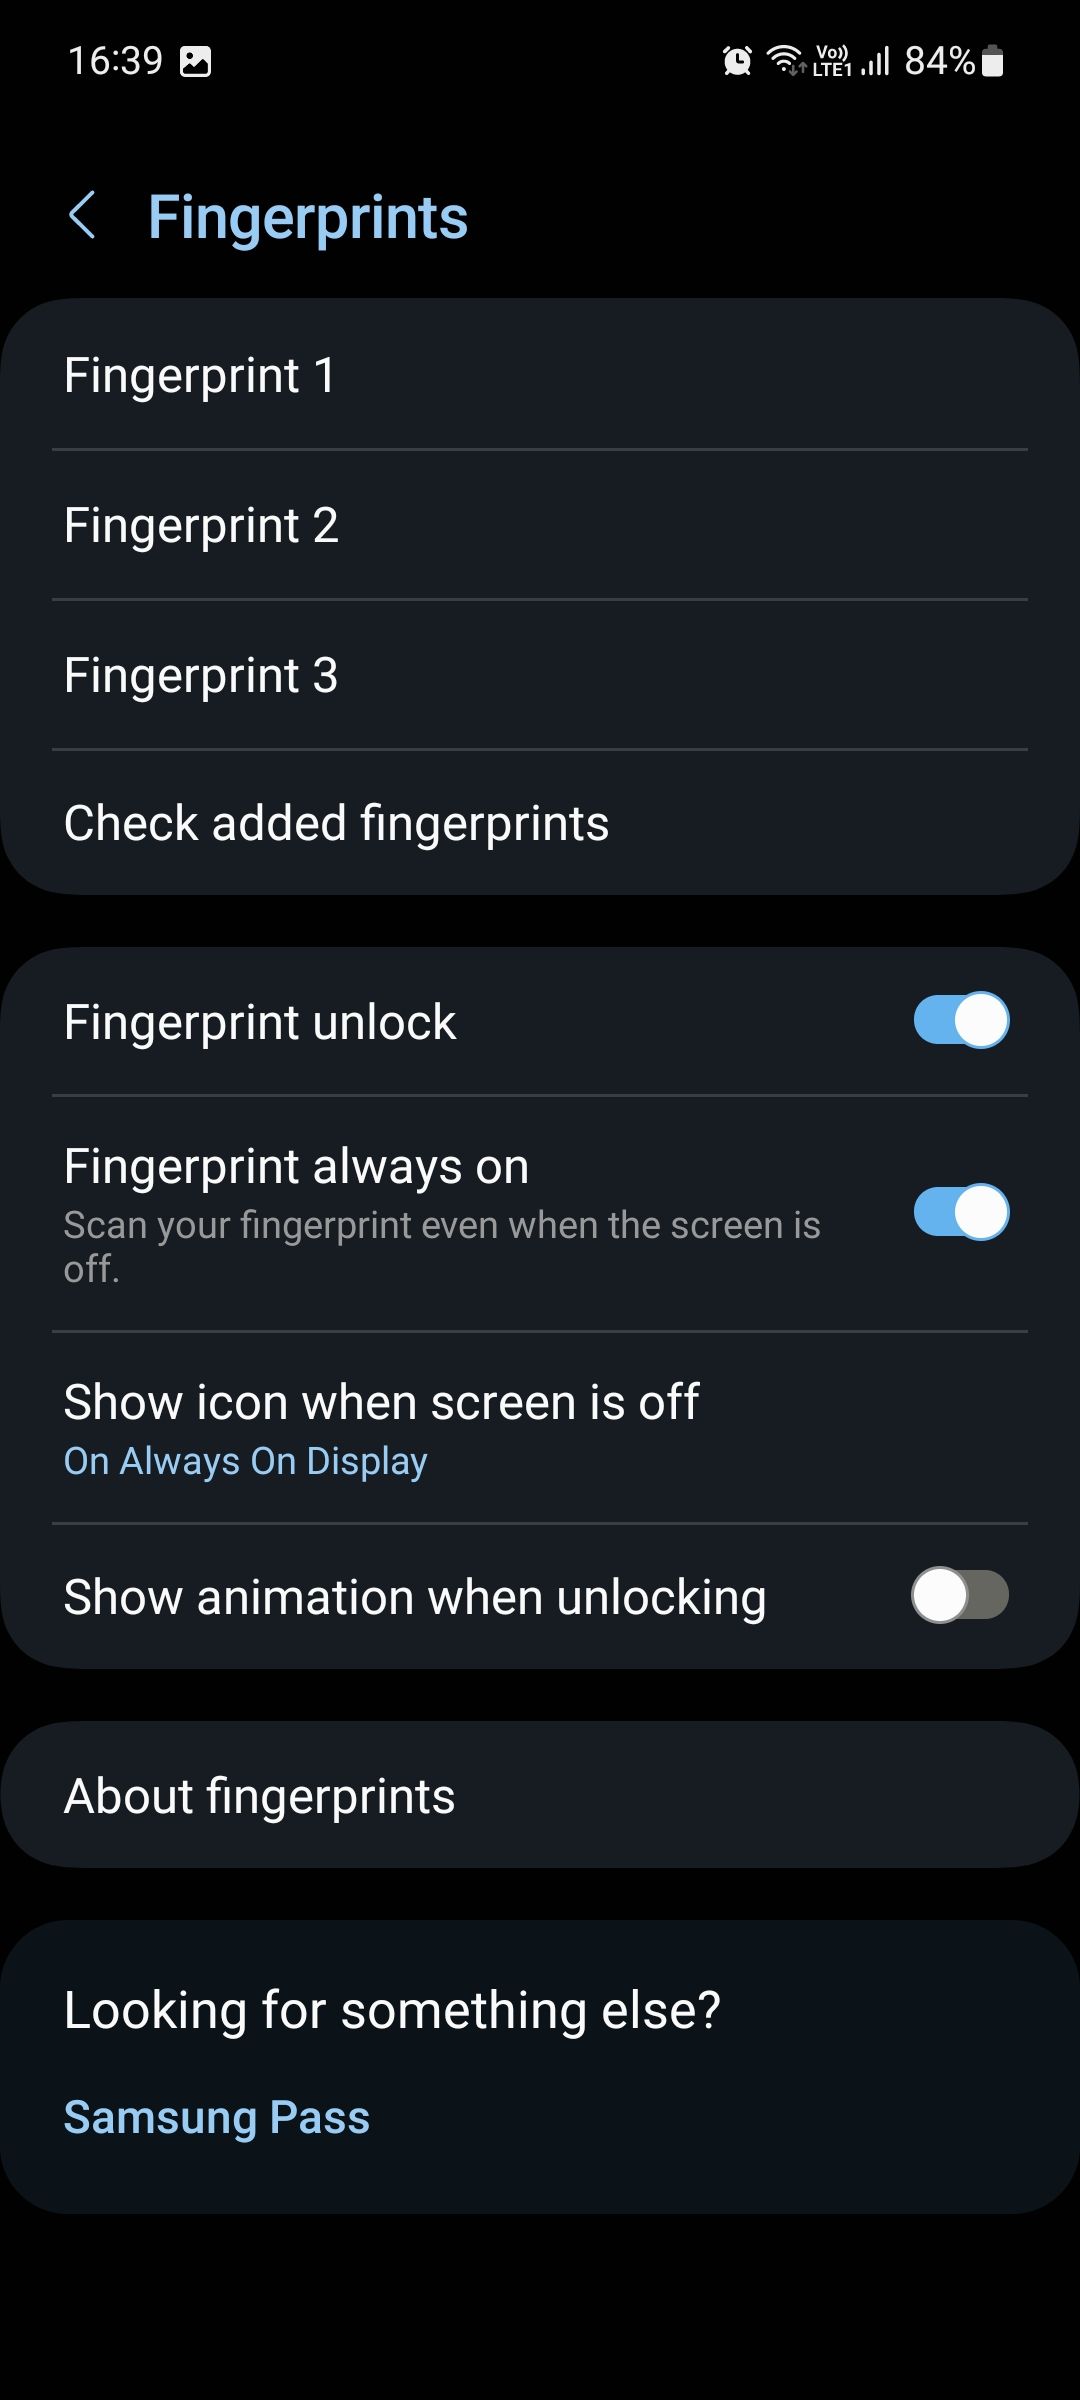 Samsung One UI 5 Fingerprints menu